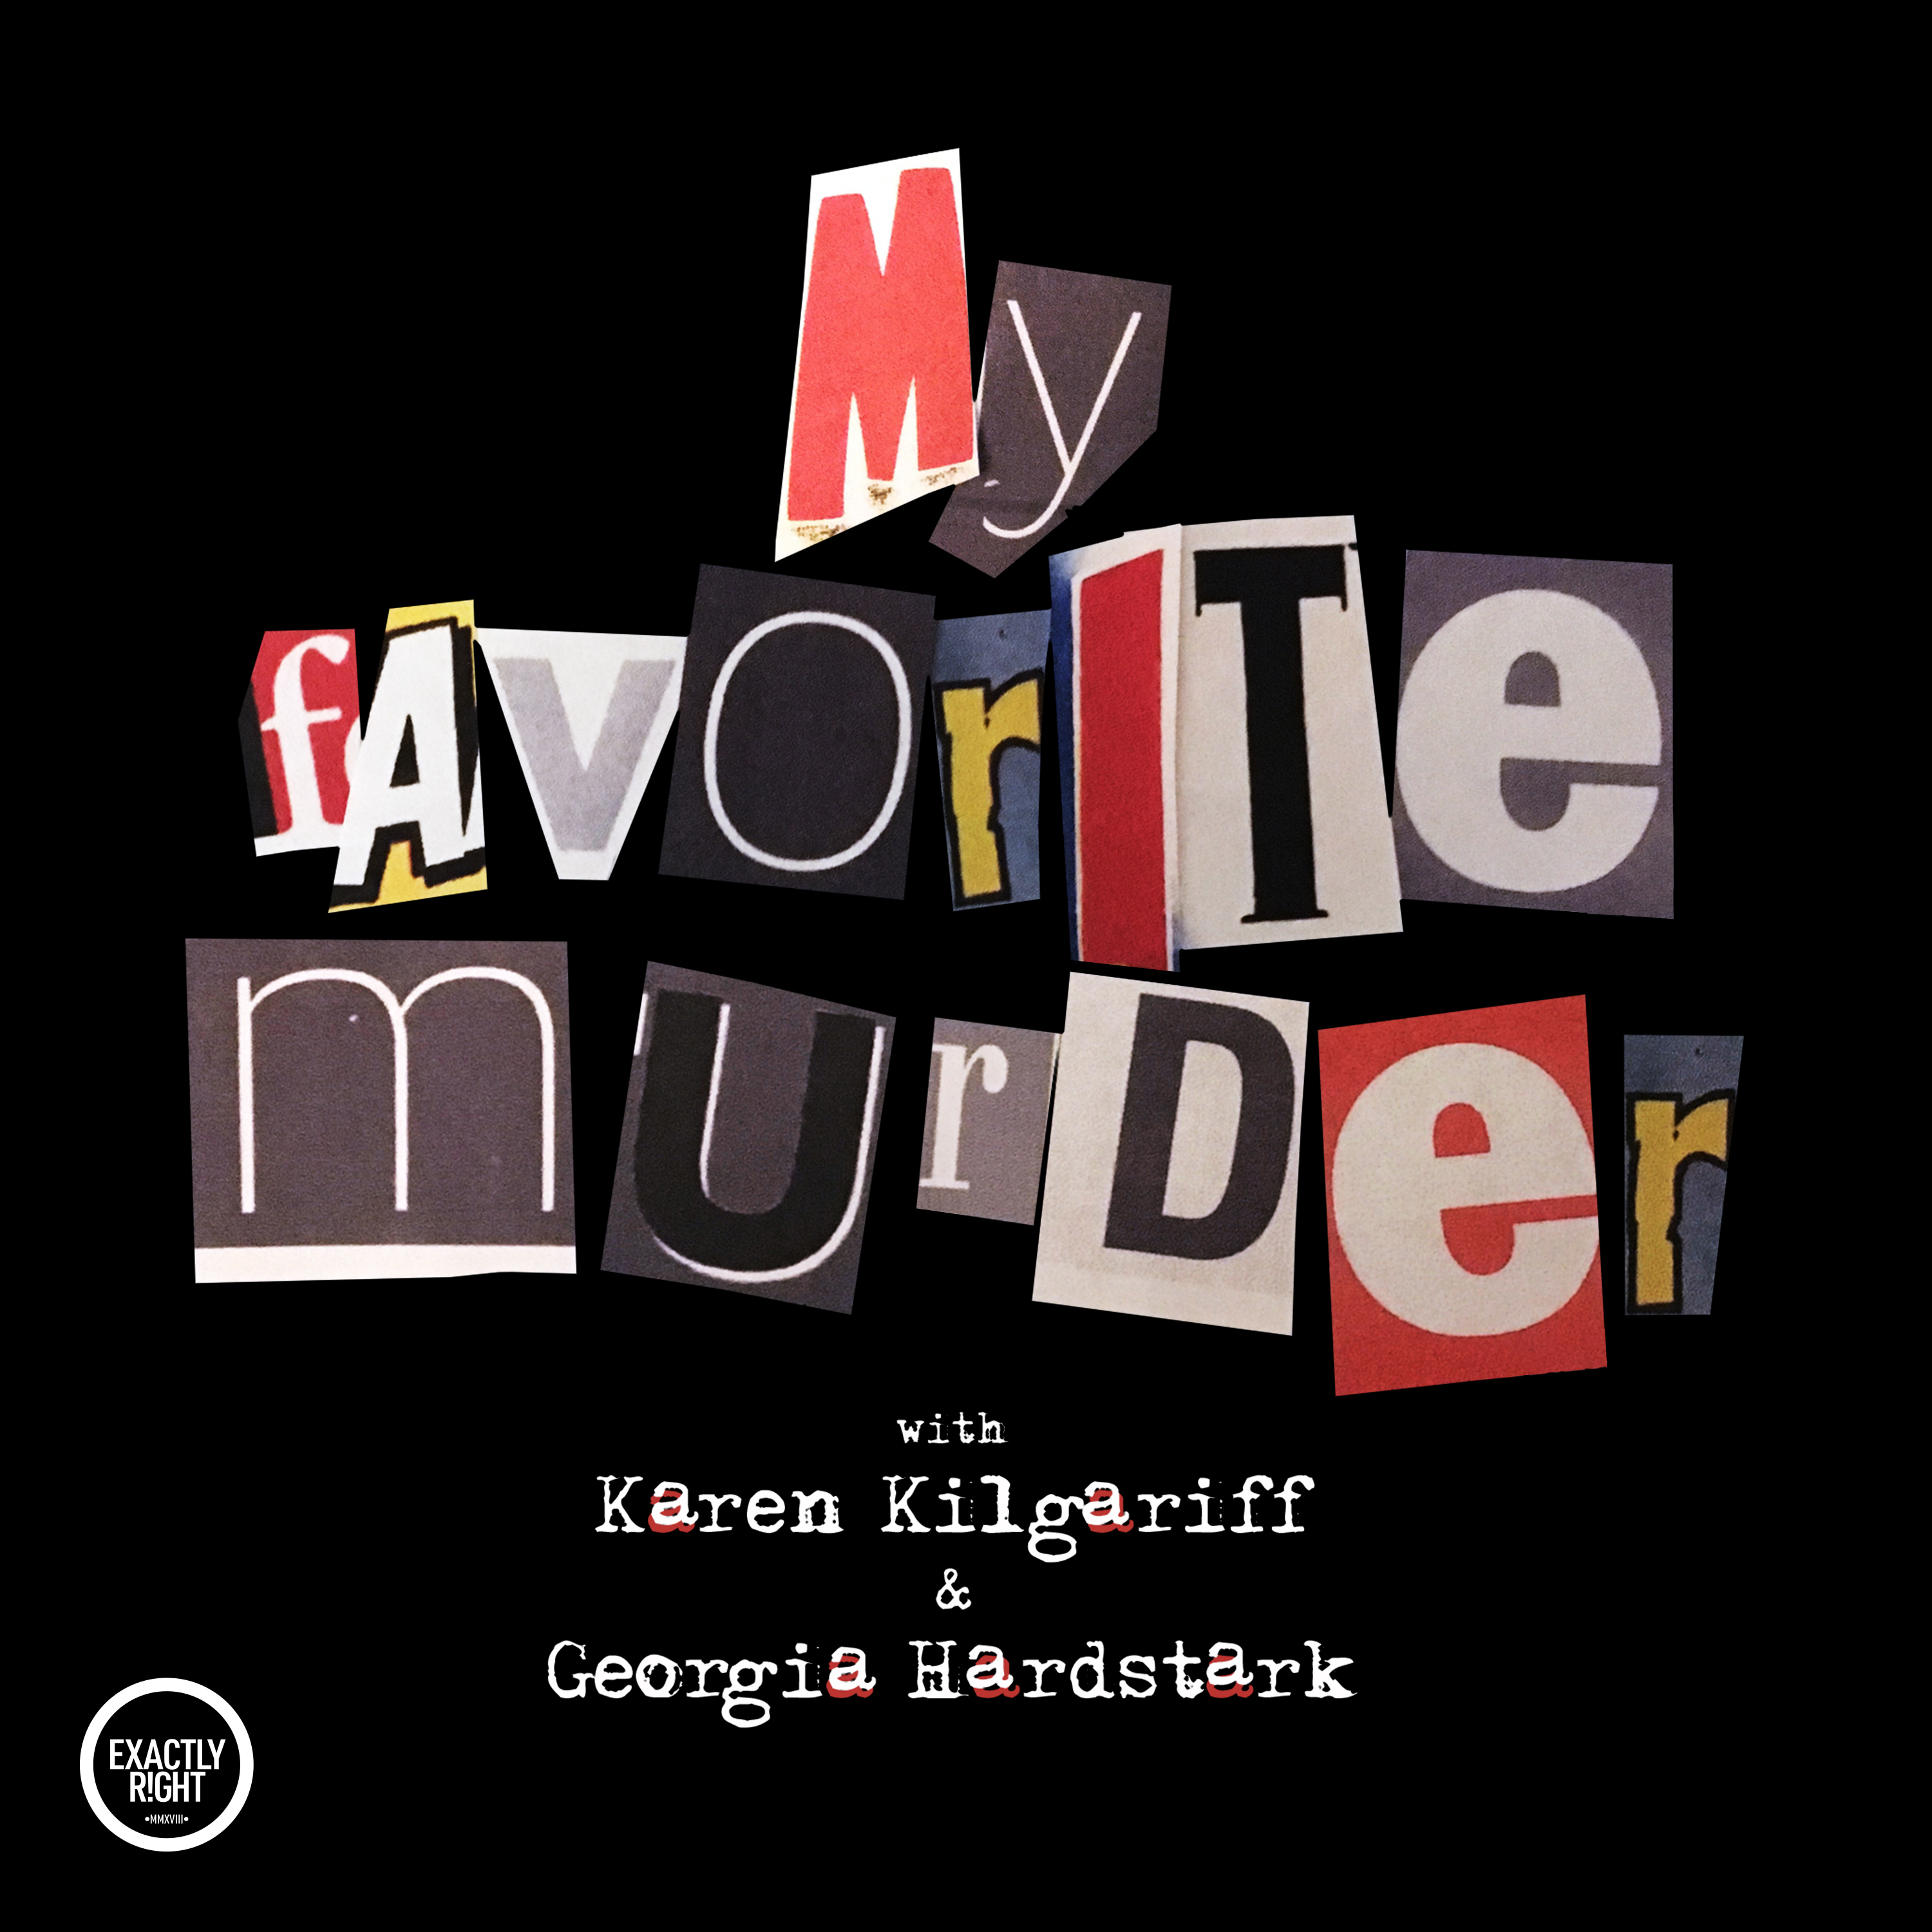 My Favorite Murder with Karen Kilgariff and Georgia Hardstark podcast show image